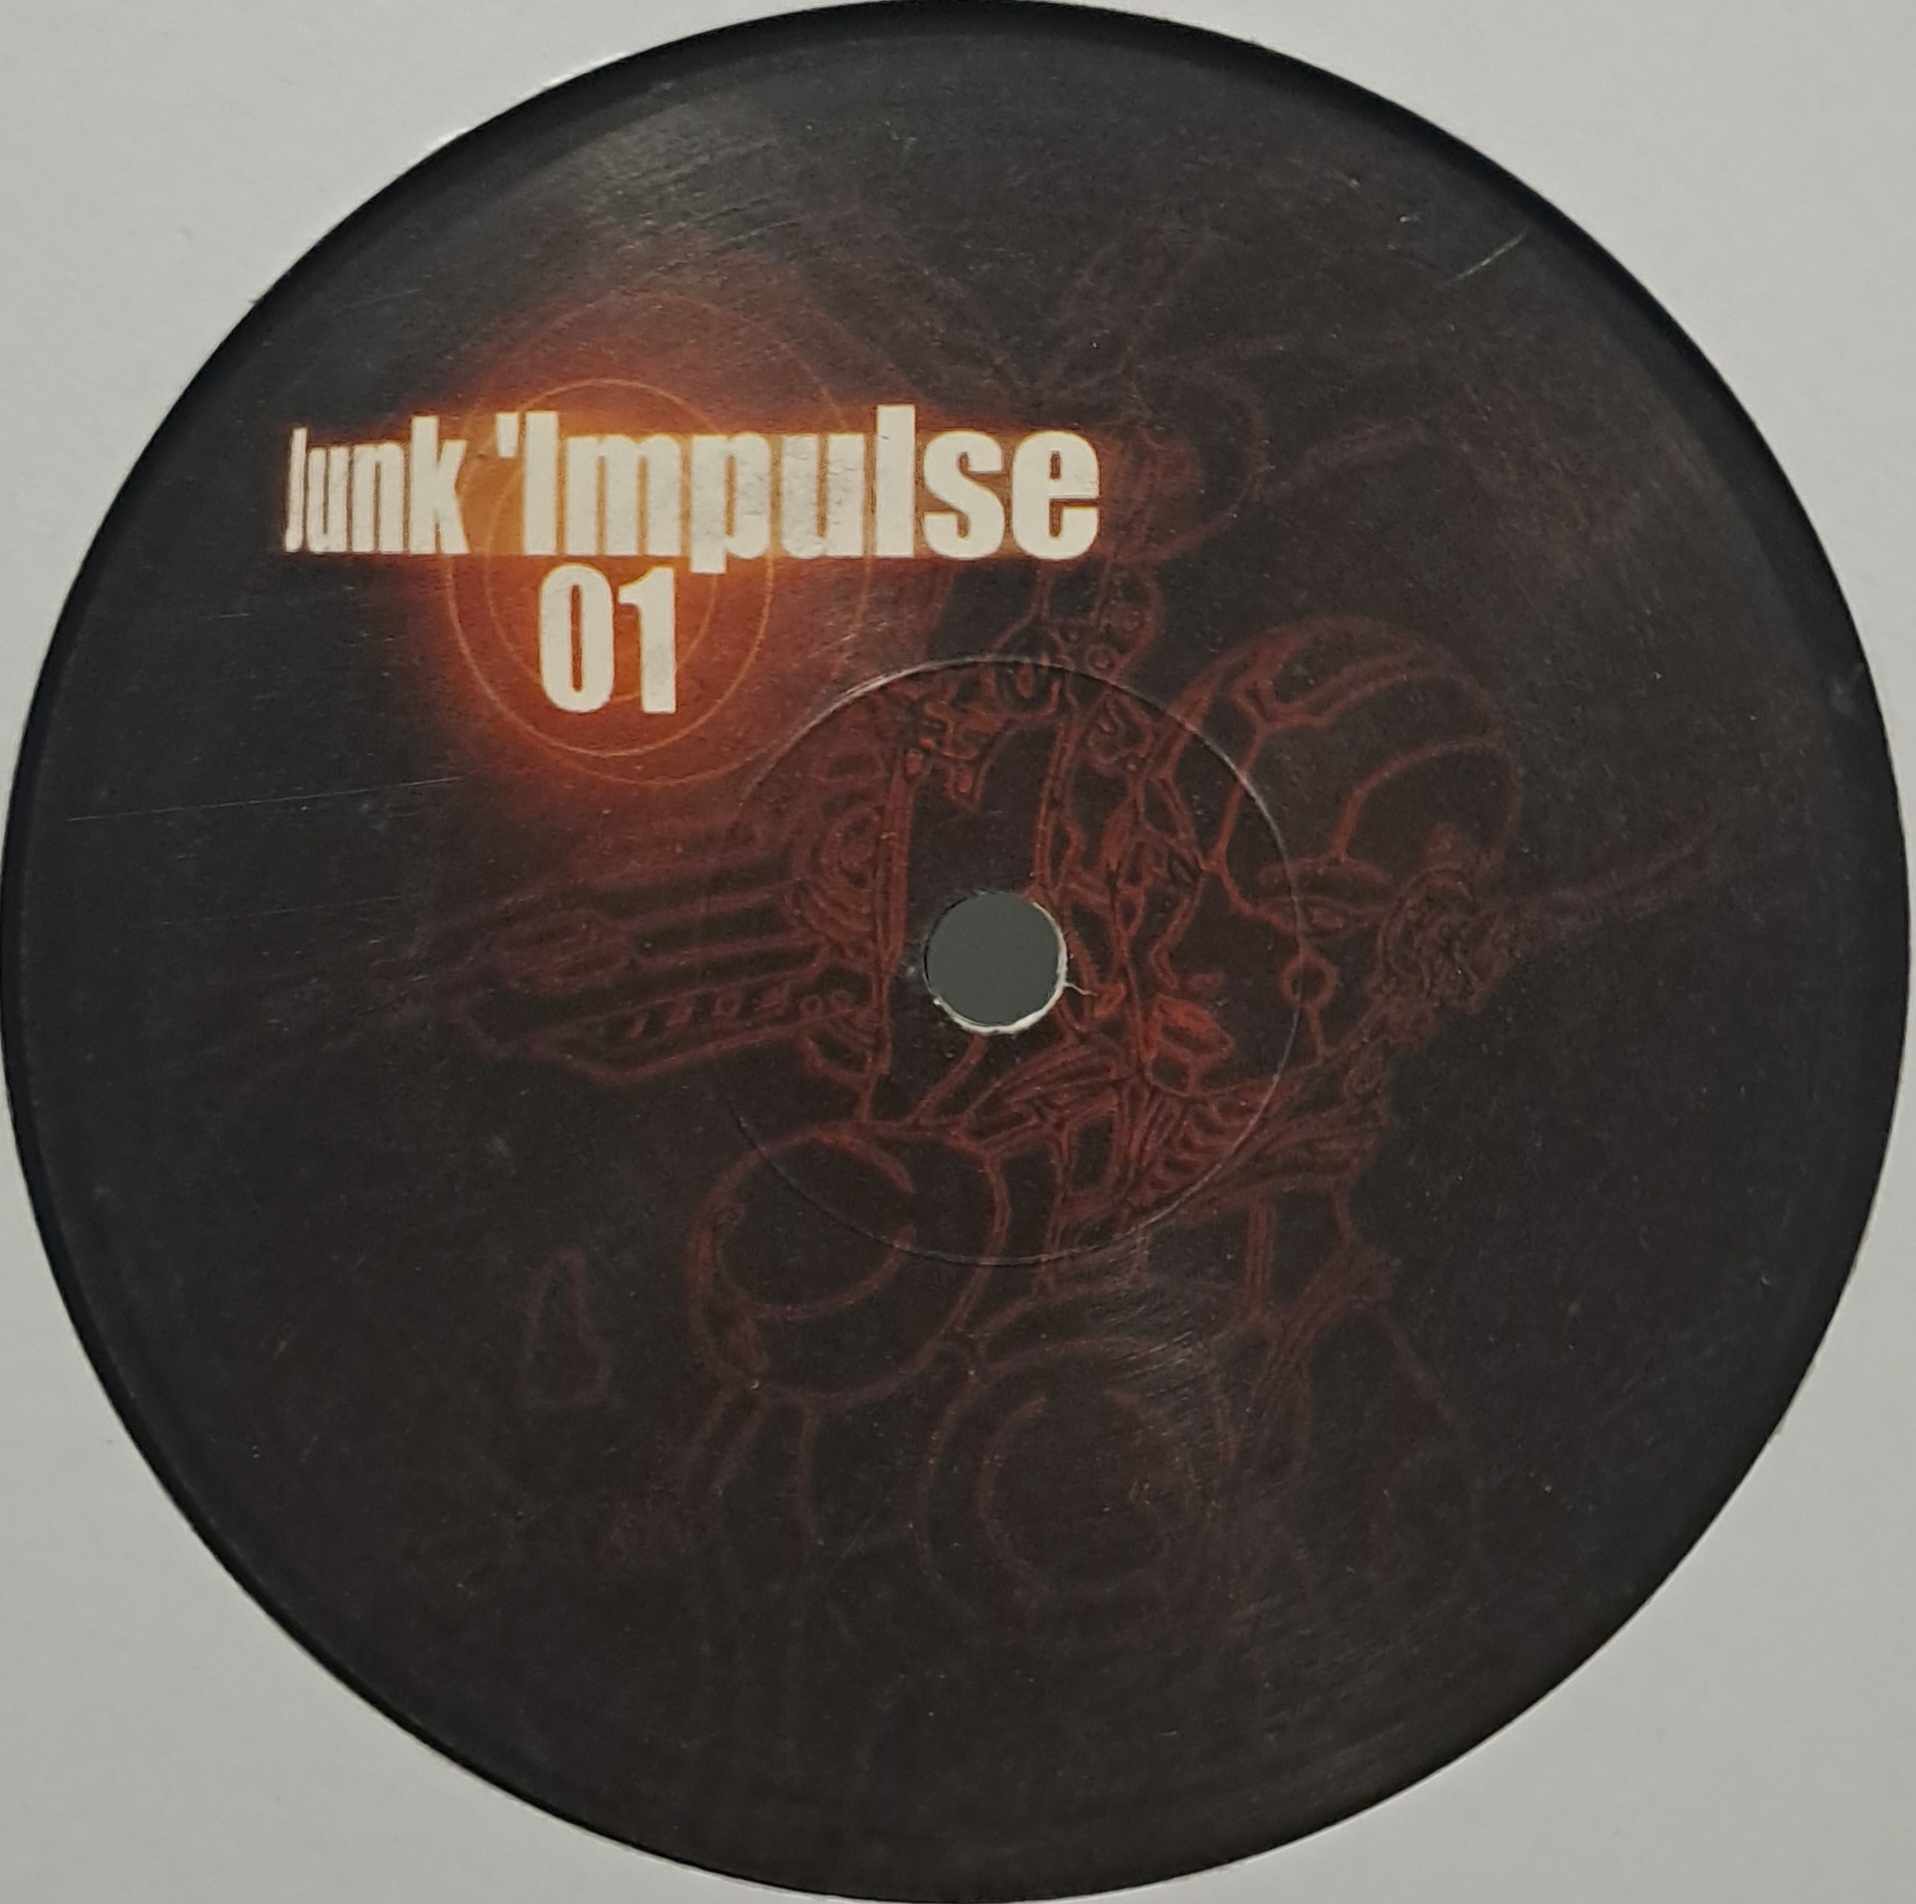 Junk Impulse 01 - vinyle tribecore